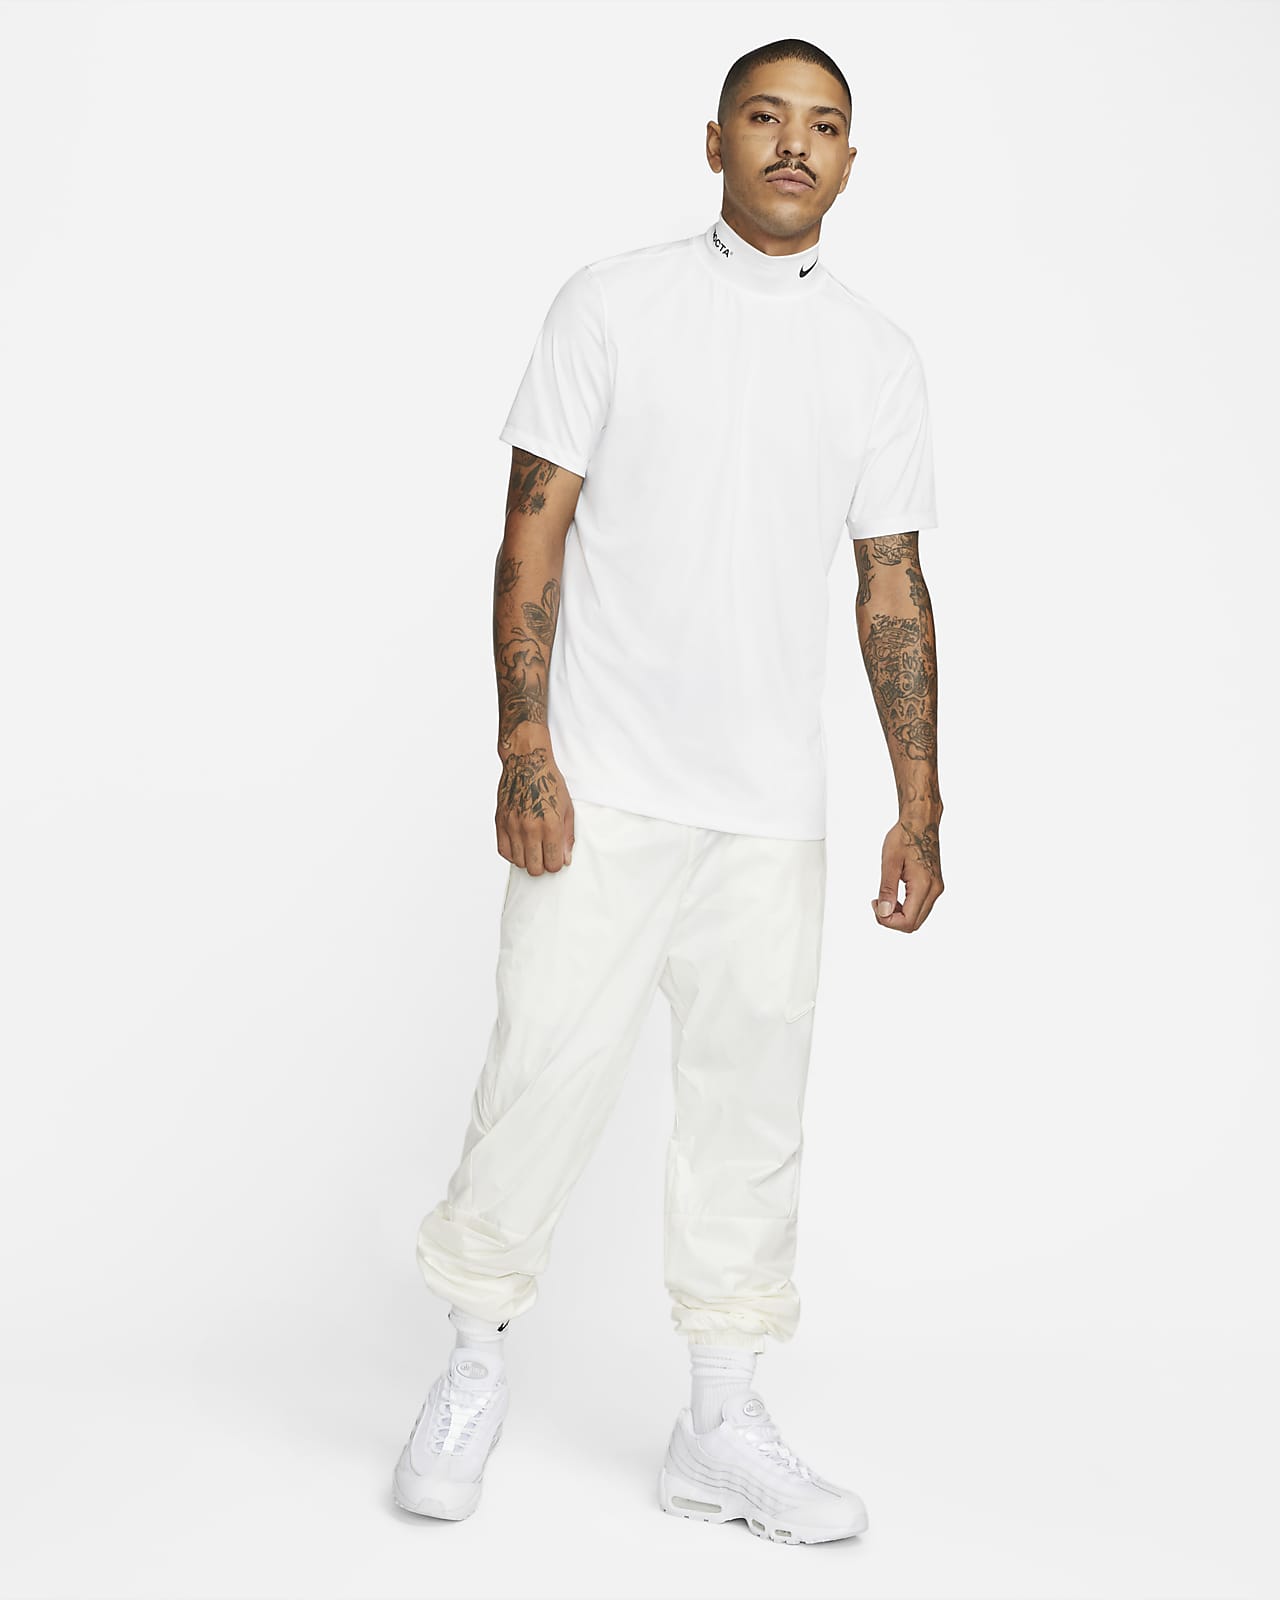 Nike NOCTA Men's Short Sleeve Top White